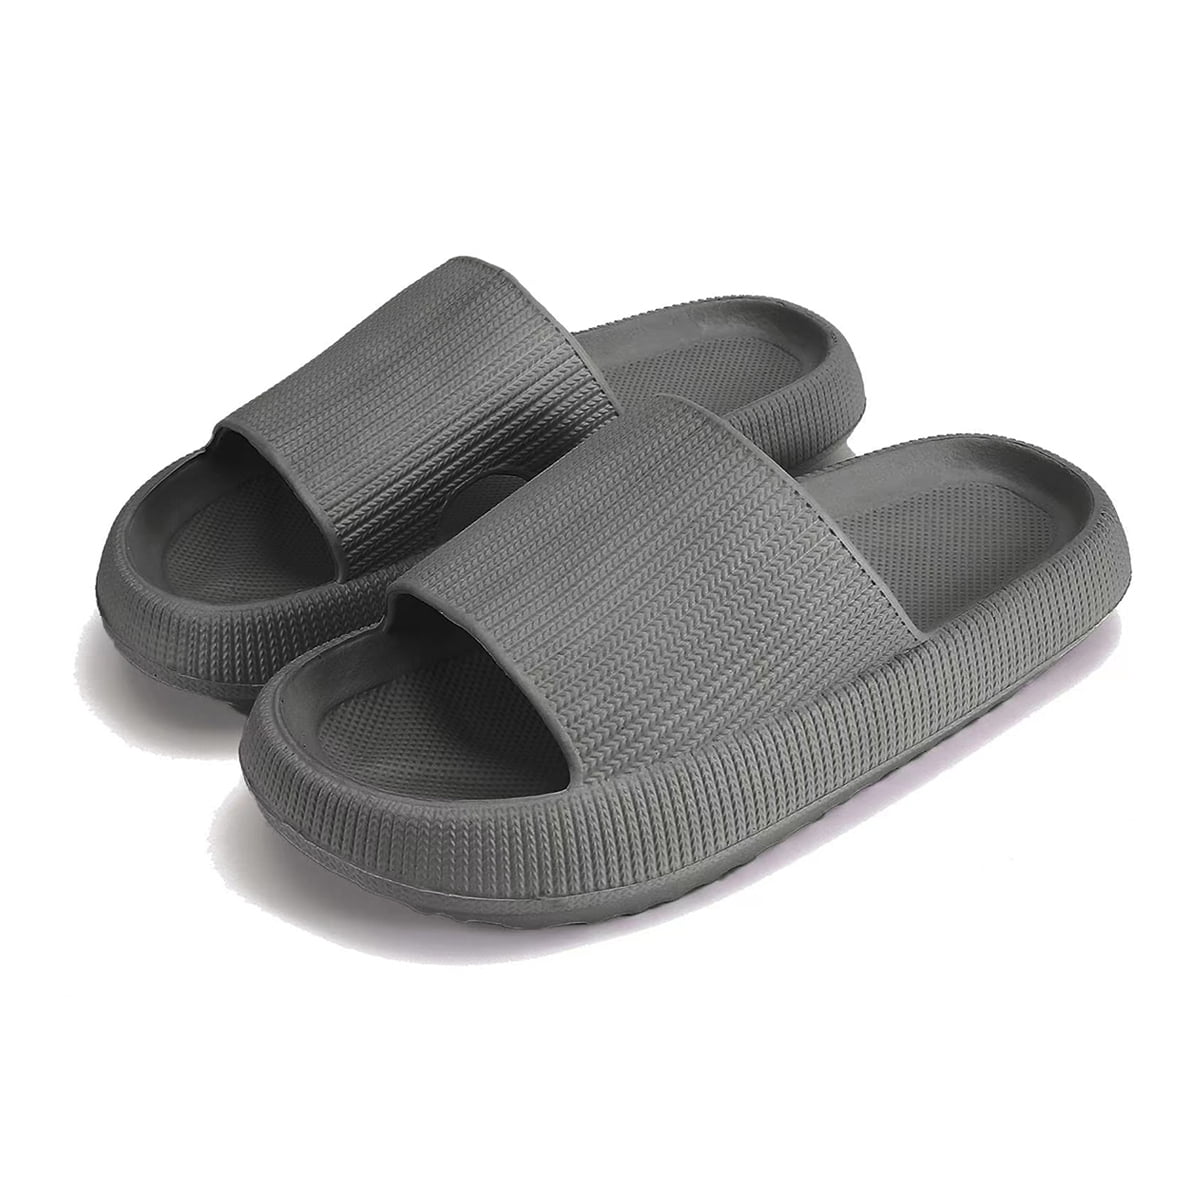 Shower Shoes Slides Sandals Women Men Slippers, Size W 5-6, M 4-5, Grey 36-37 - Walmart.com